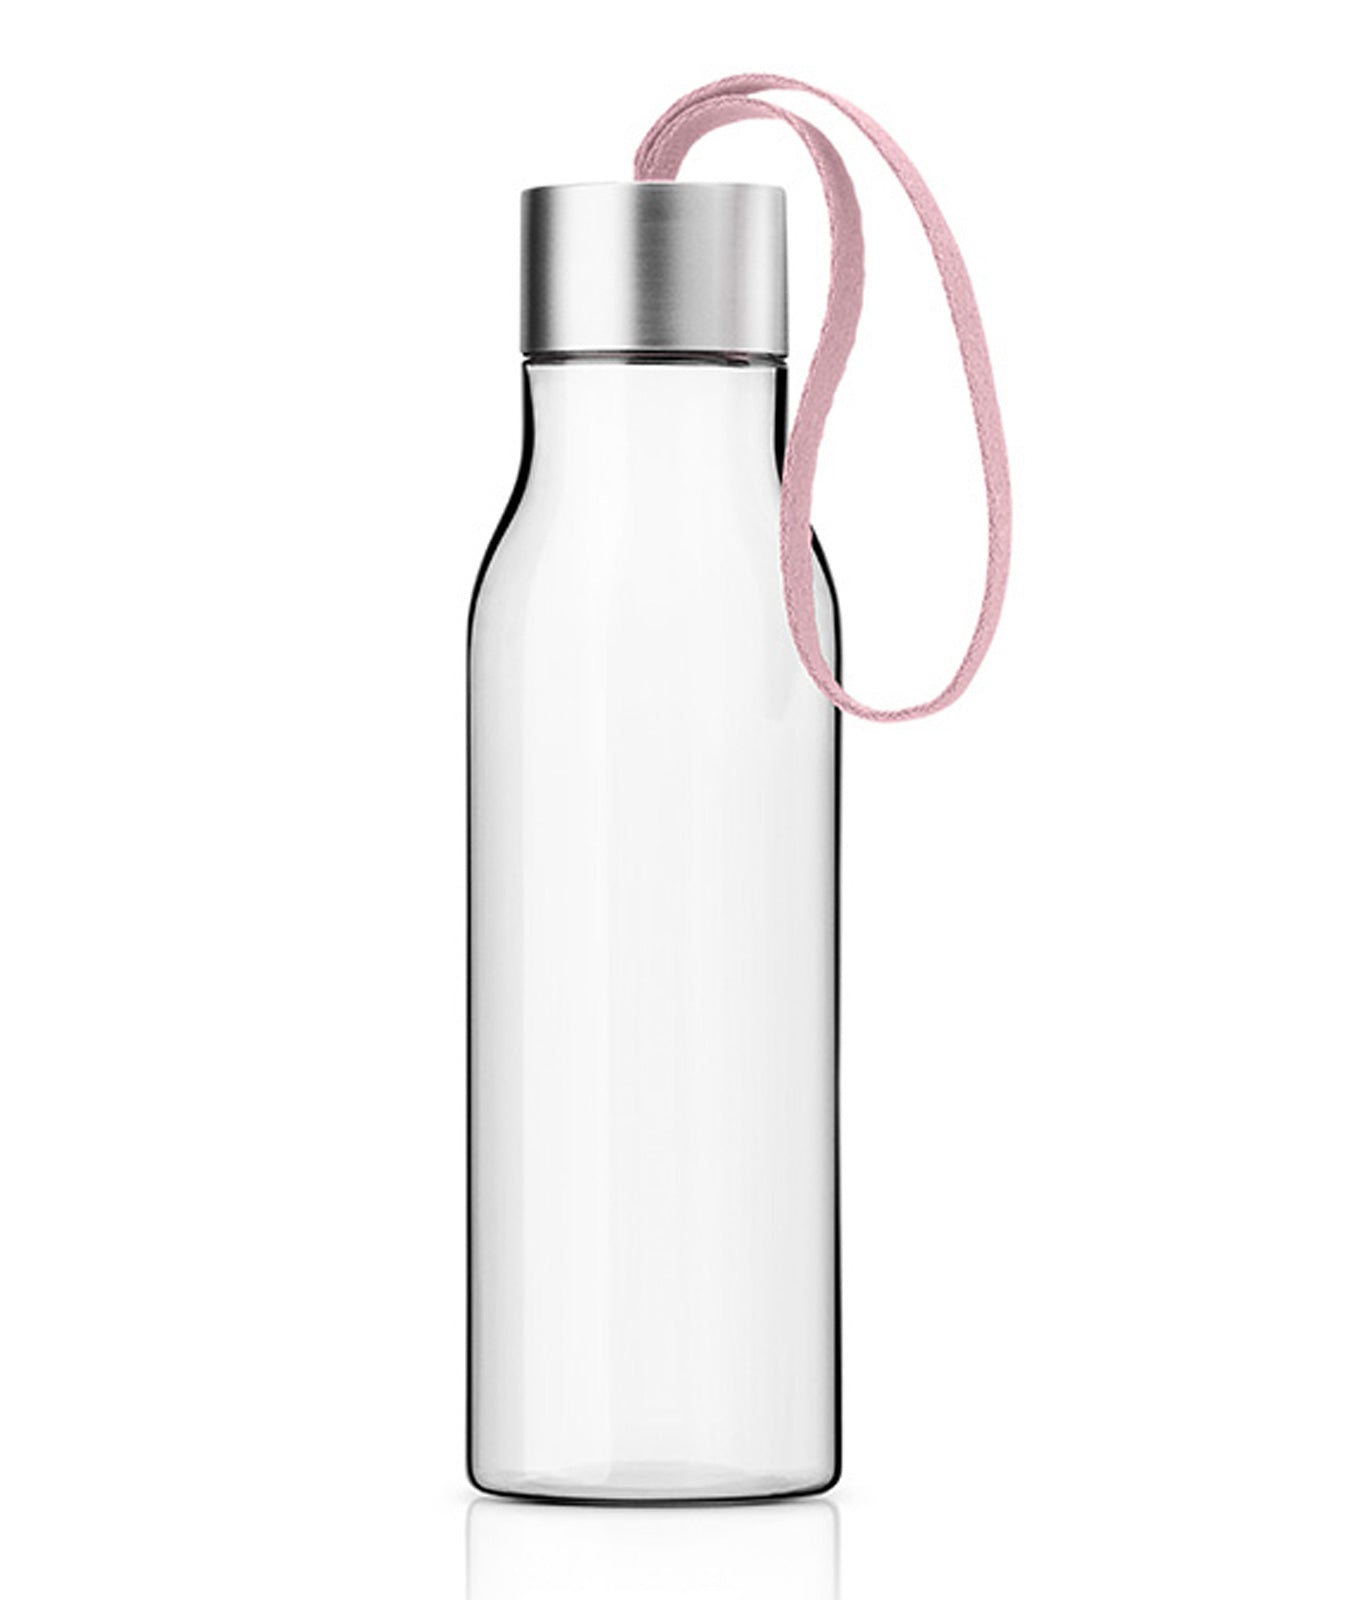 Eva Solo Drikkeflaske - Rose Quartz - 0,5 liter